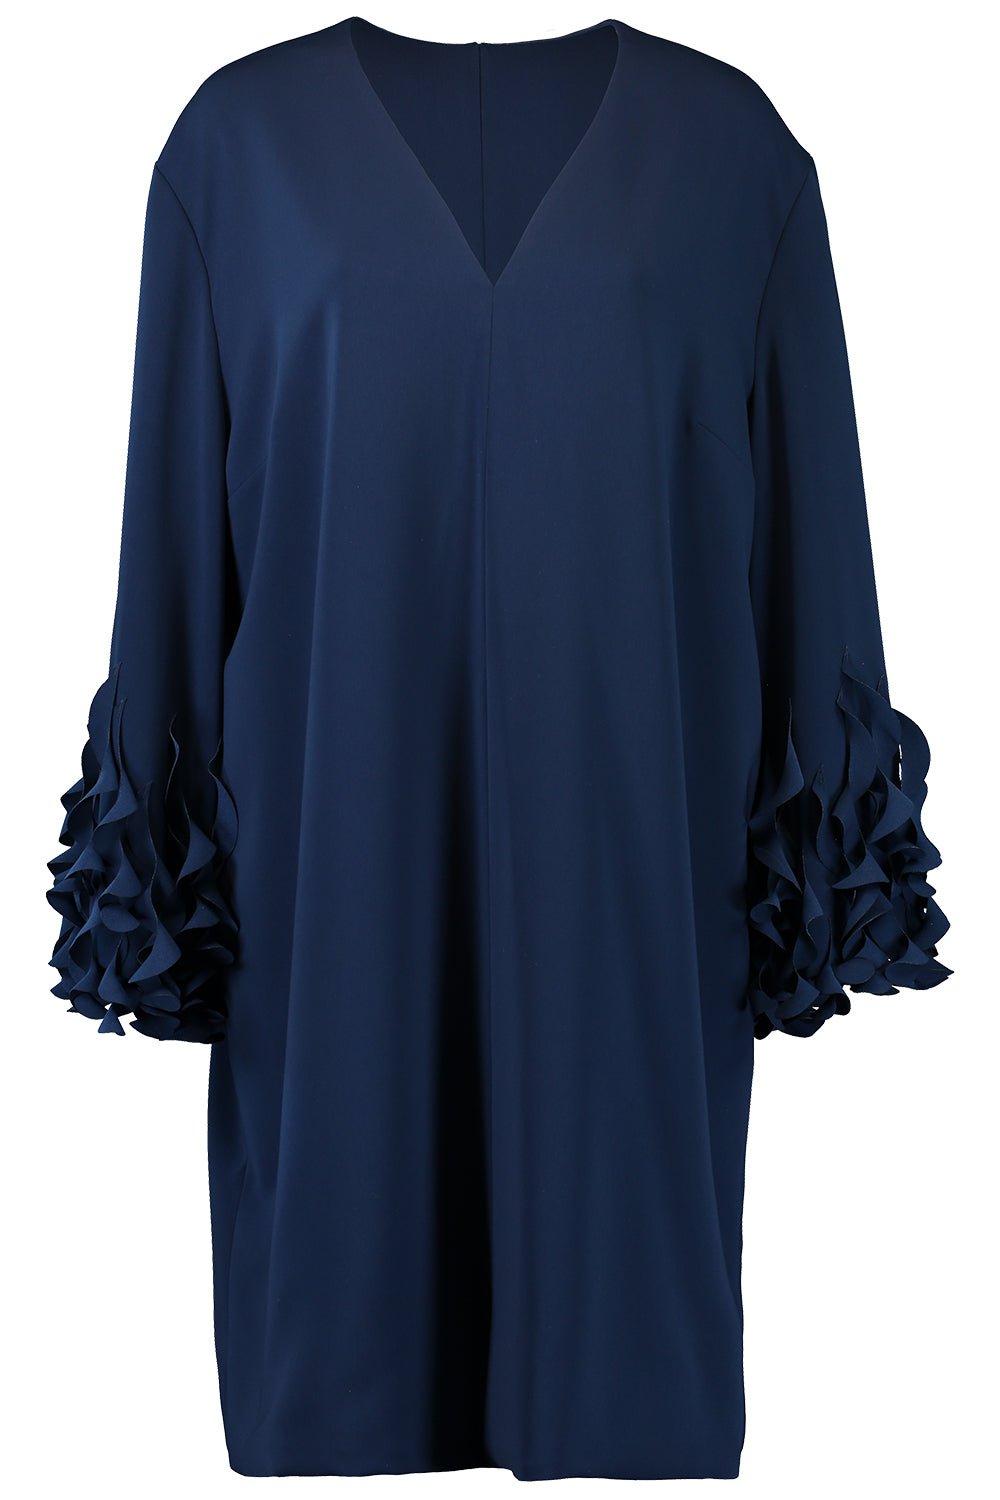 CATHERINE REGEHR-Three Quarter Sleeve Arak Dress - Classic Navy-CLASSIC NAVY